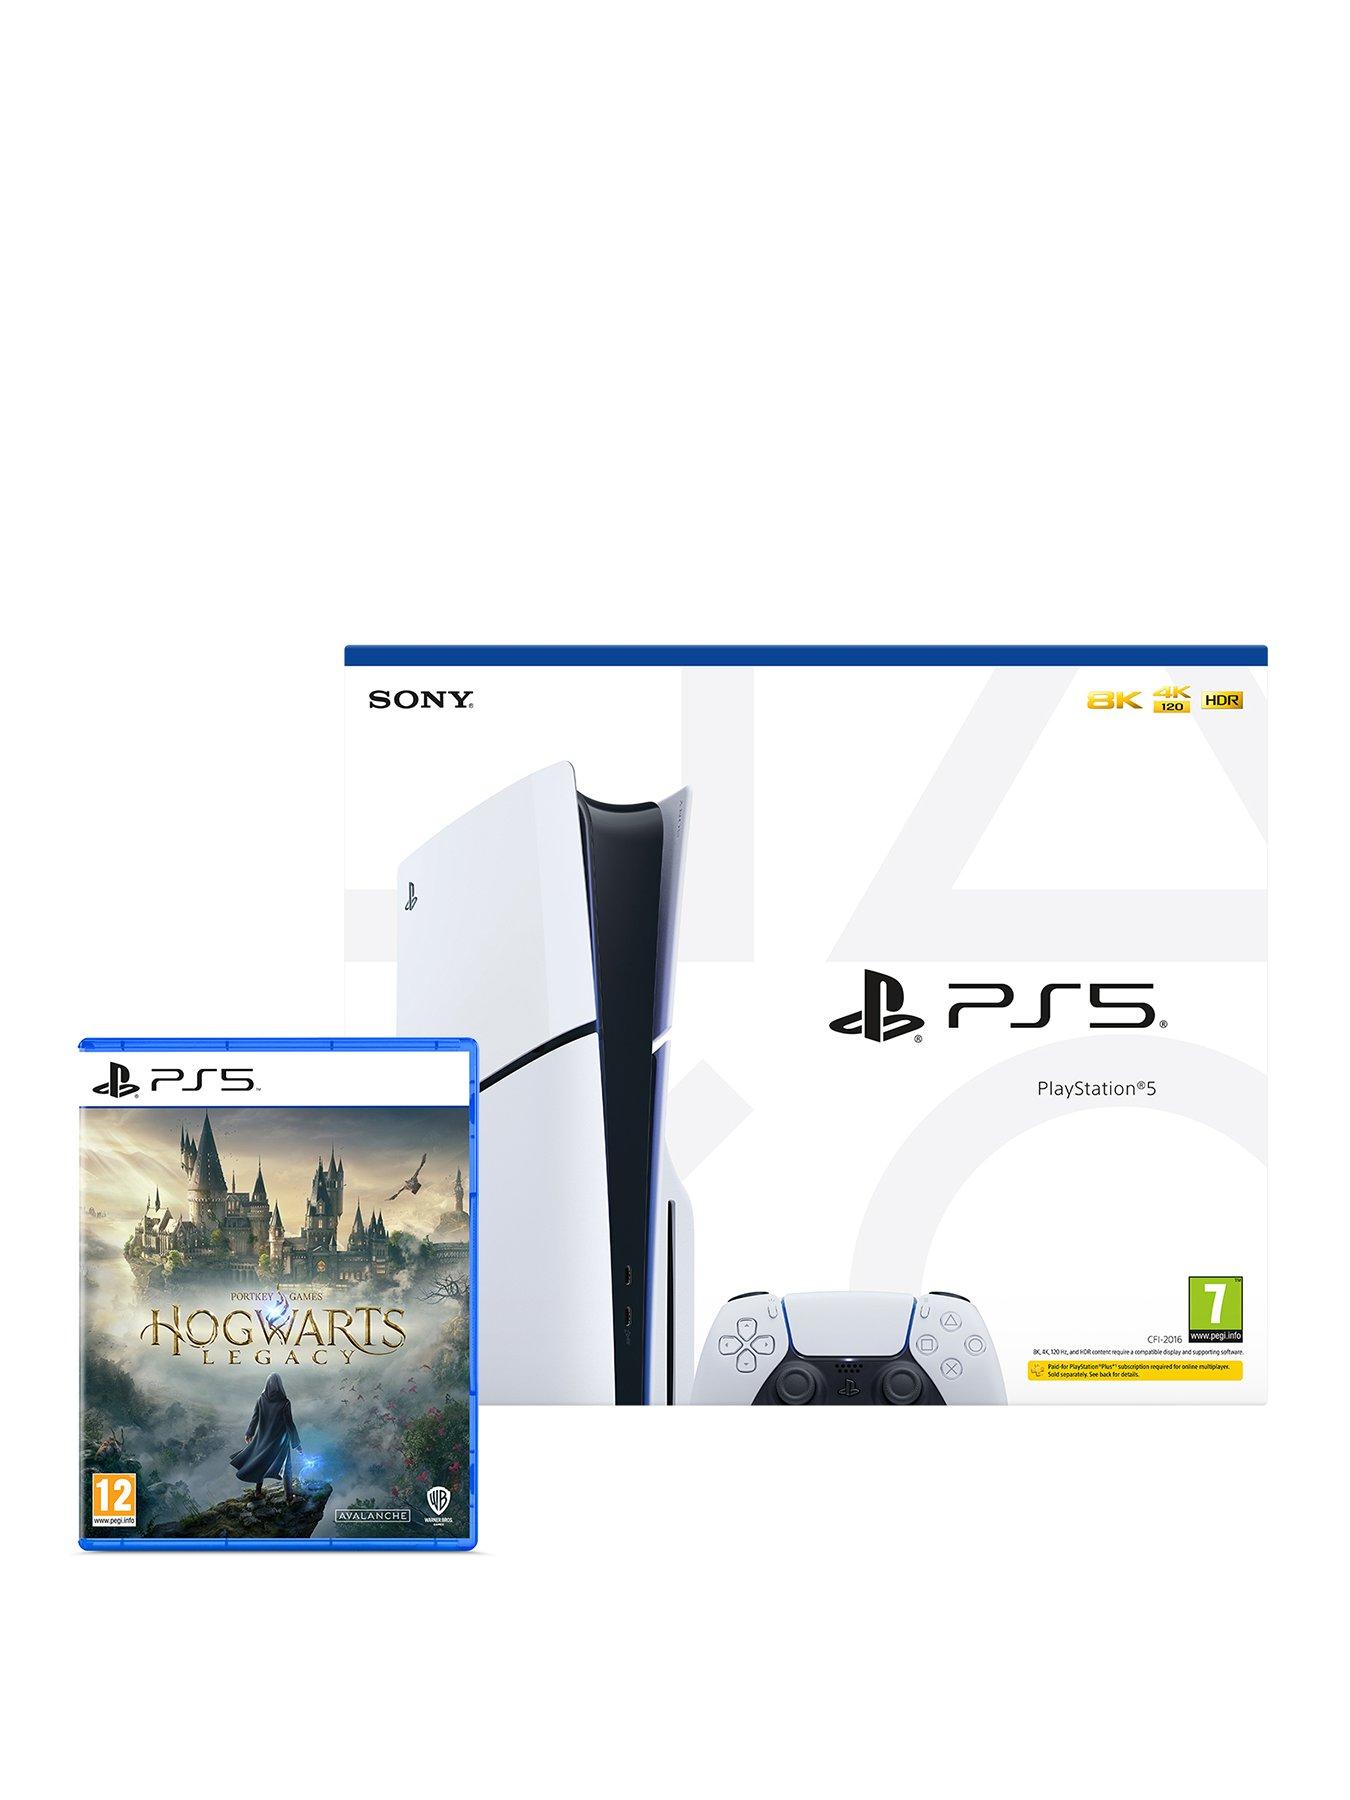 PlayStation®5 Digital Edition Console (model group - slim)*